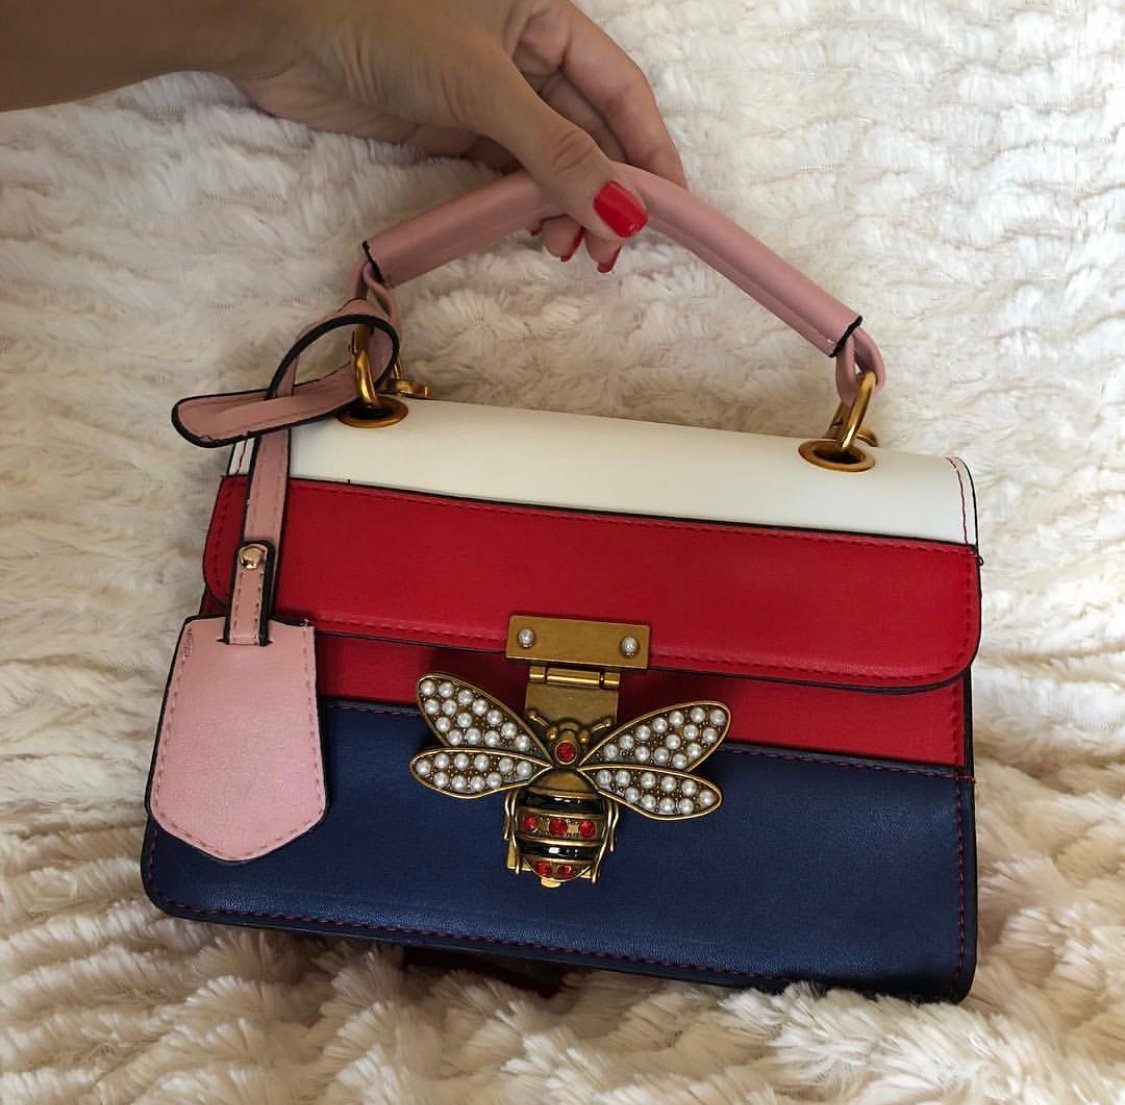 gucci inspired purse